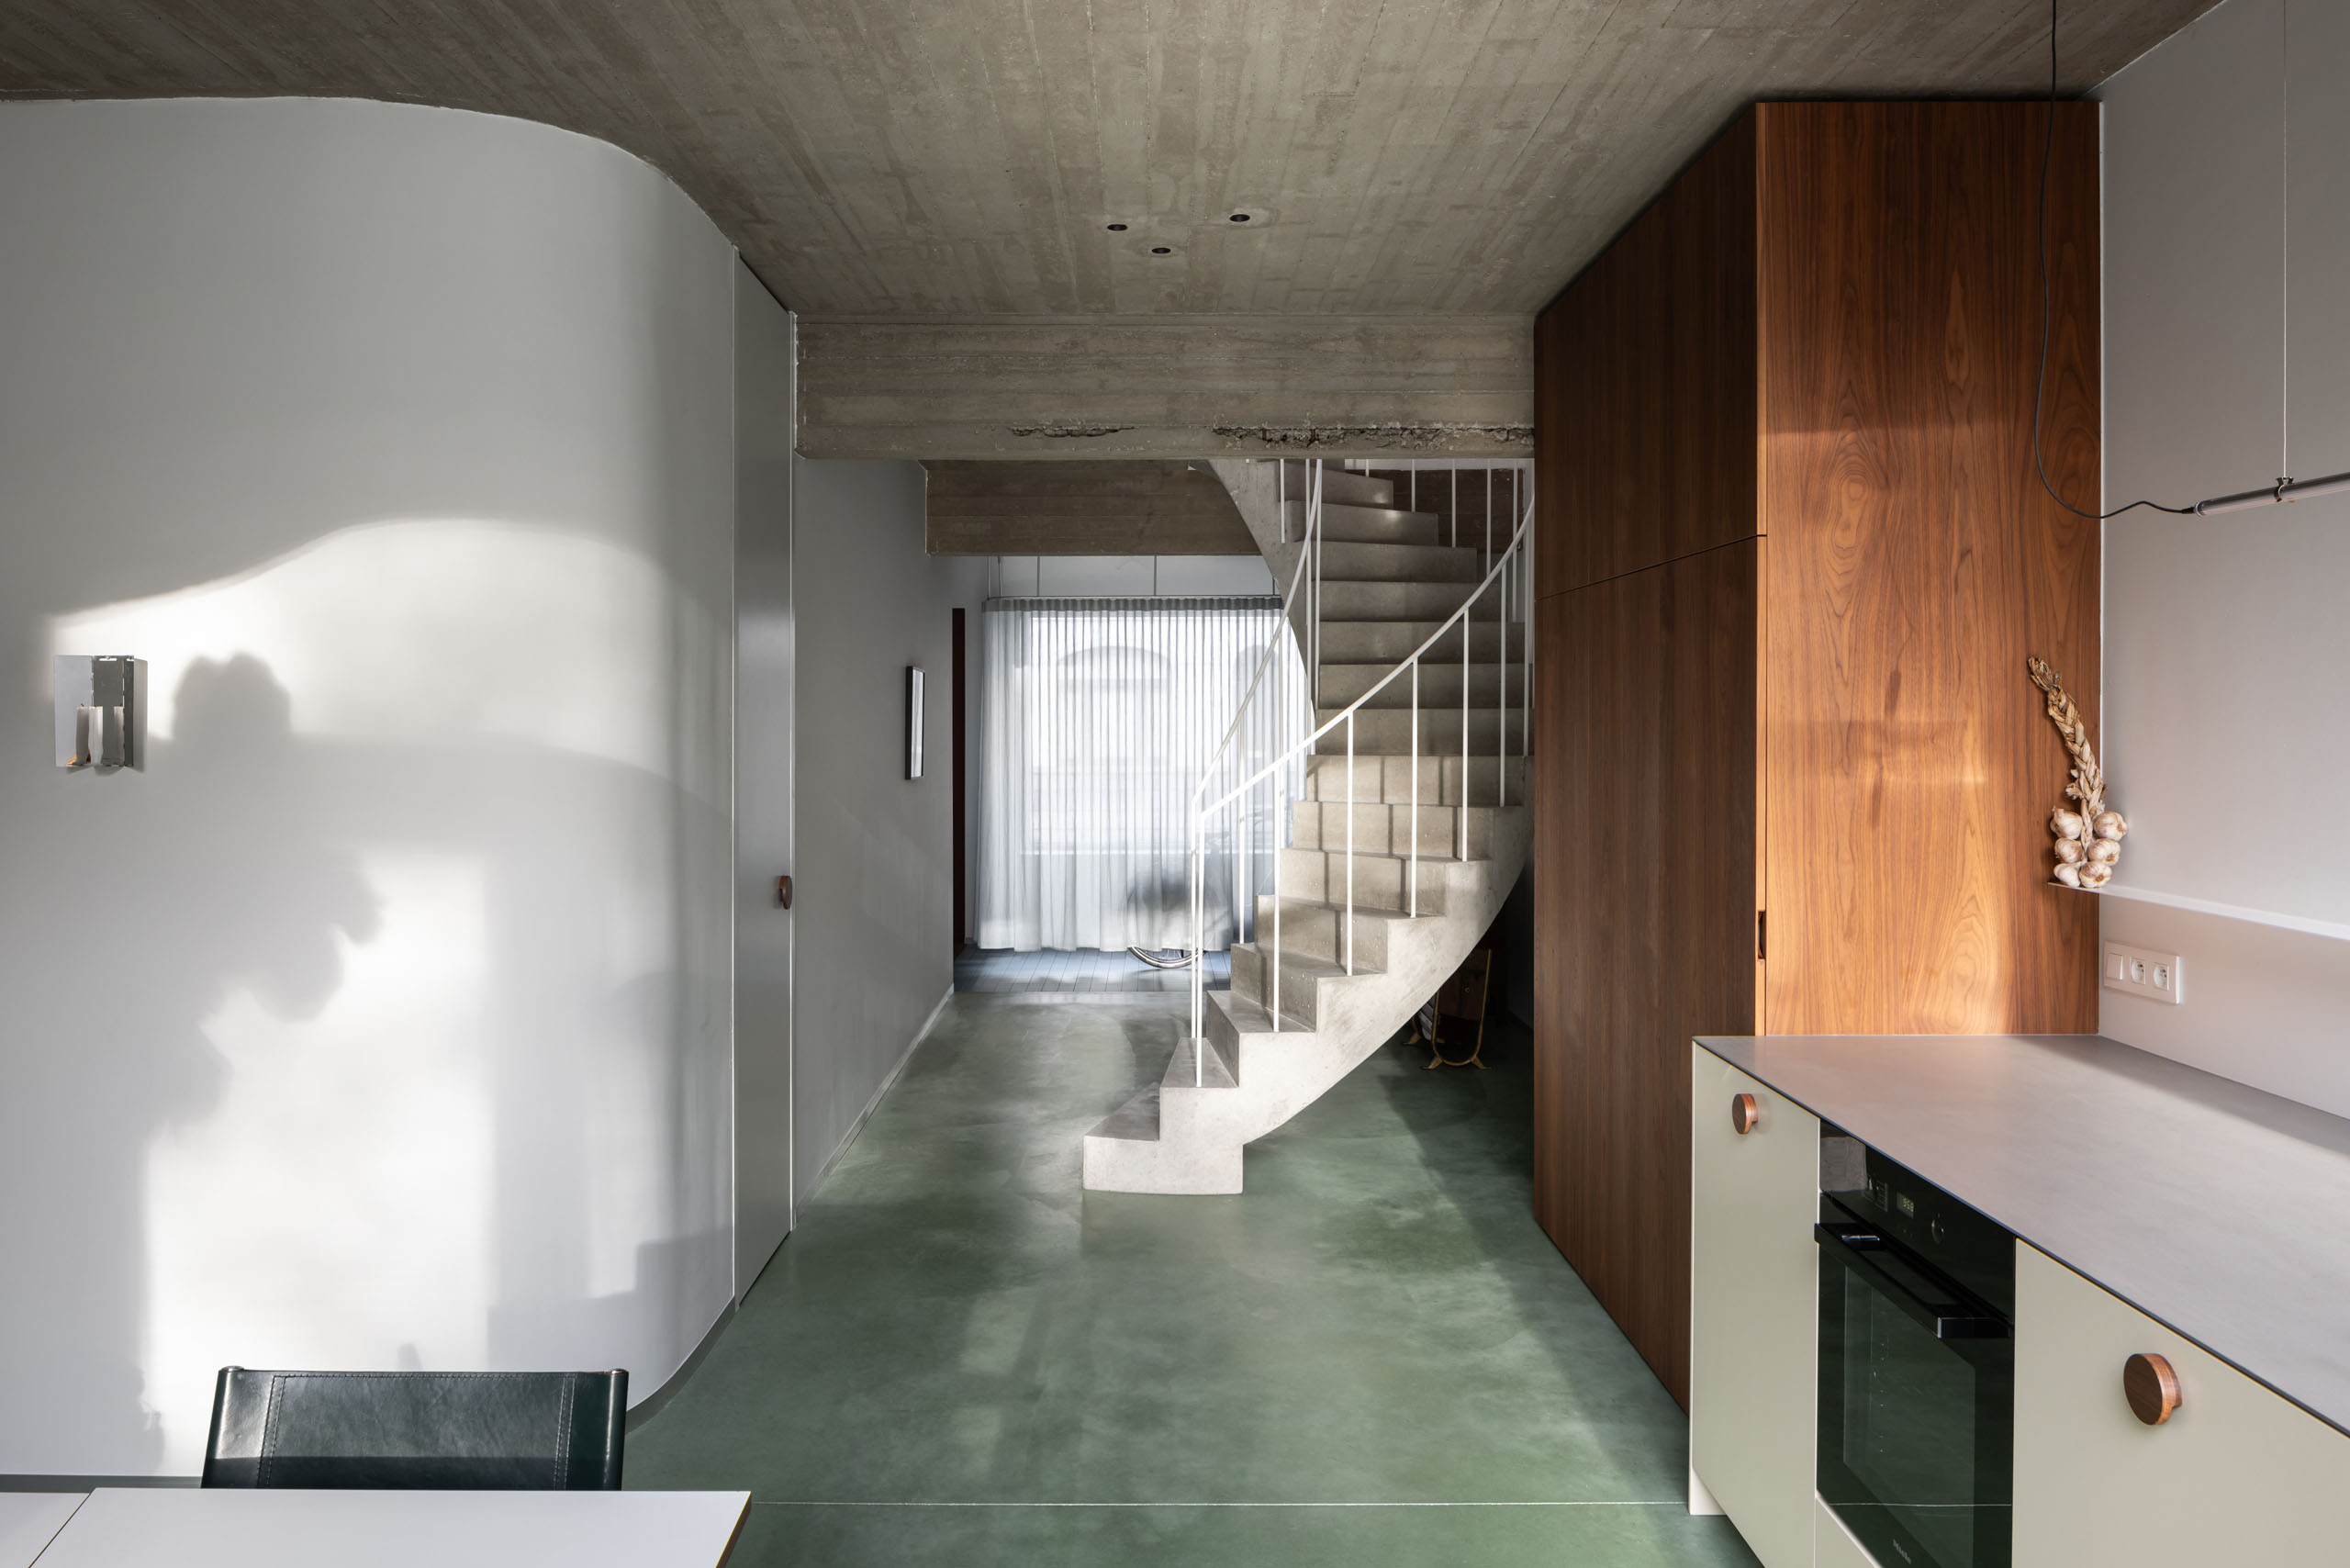 Philippe Corthout + memo architectuur